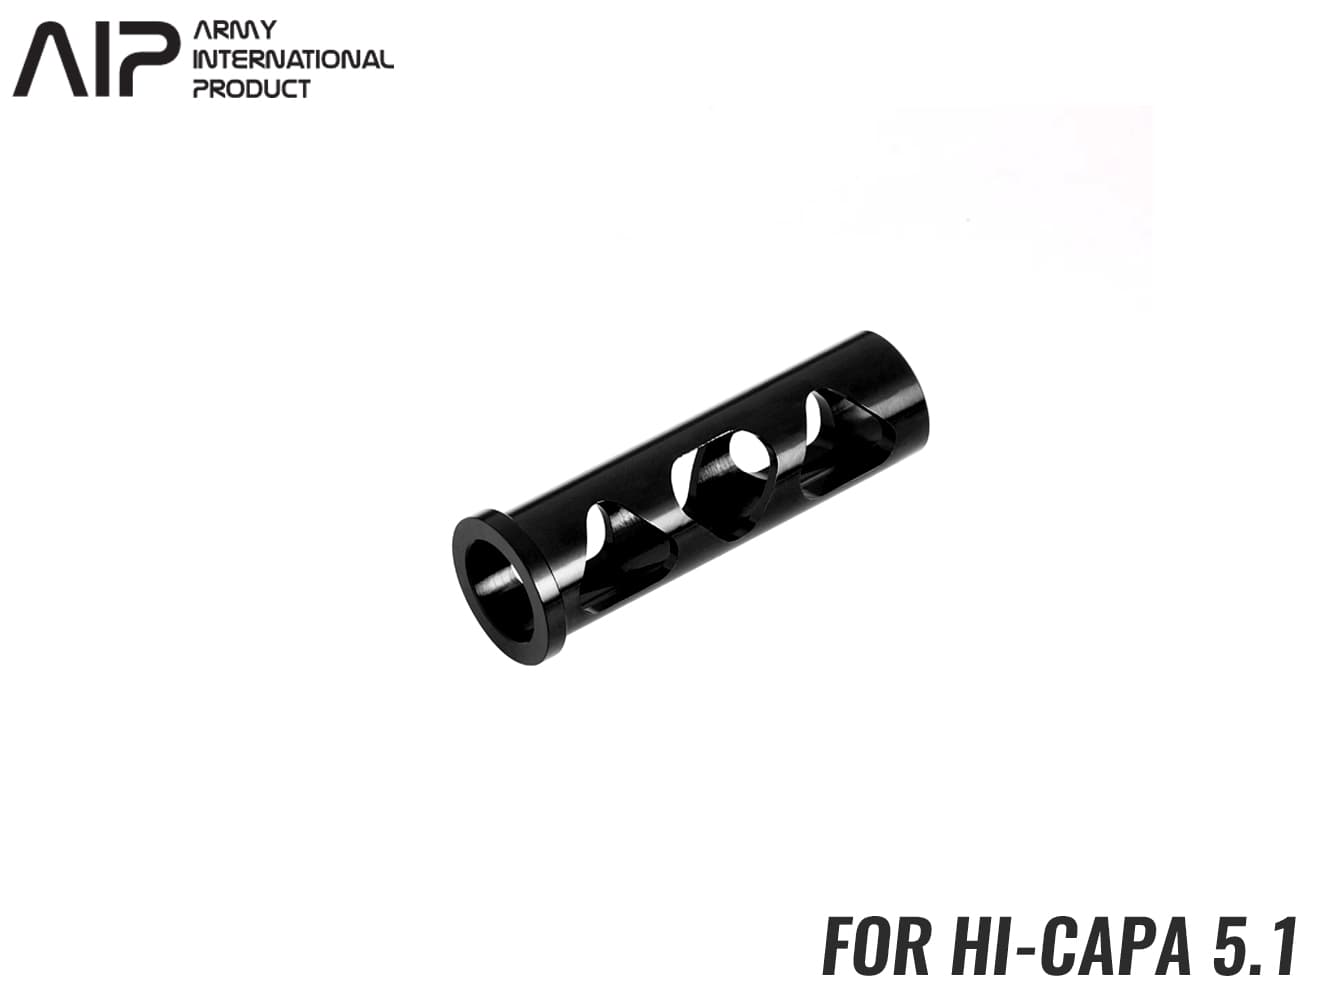 AIP ライトウェイト リコイルプラグ Hi-CAPA 5.1 BK 東京マルイ ガスブロ ハイキャパ 5.1シリーズ対応 軽量 肉抜きデザイン メタルスライド化に